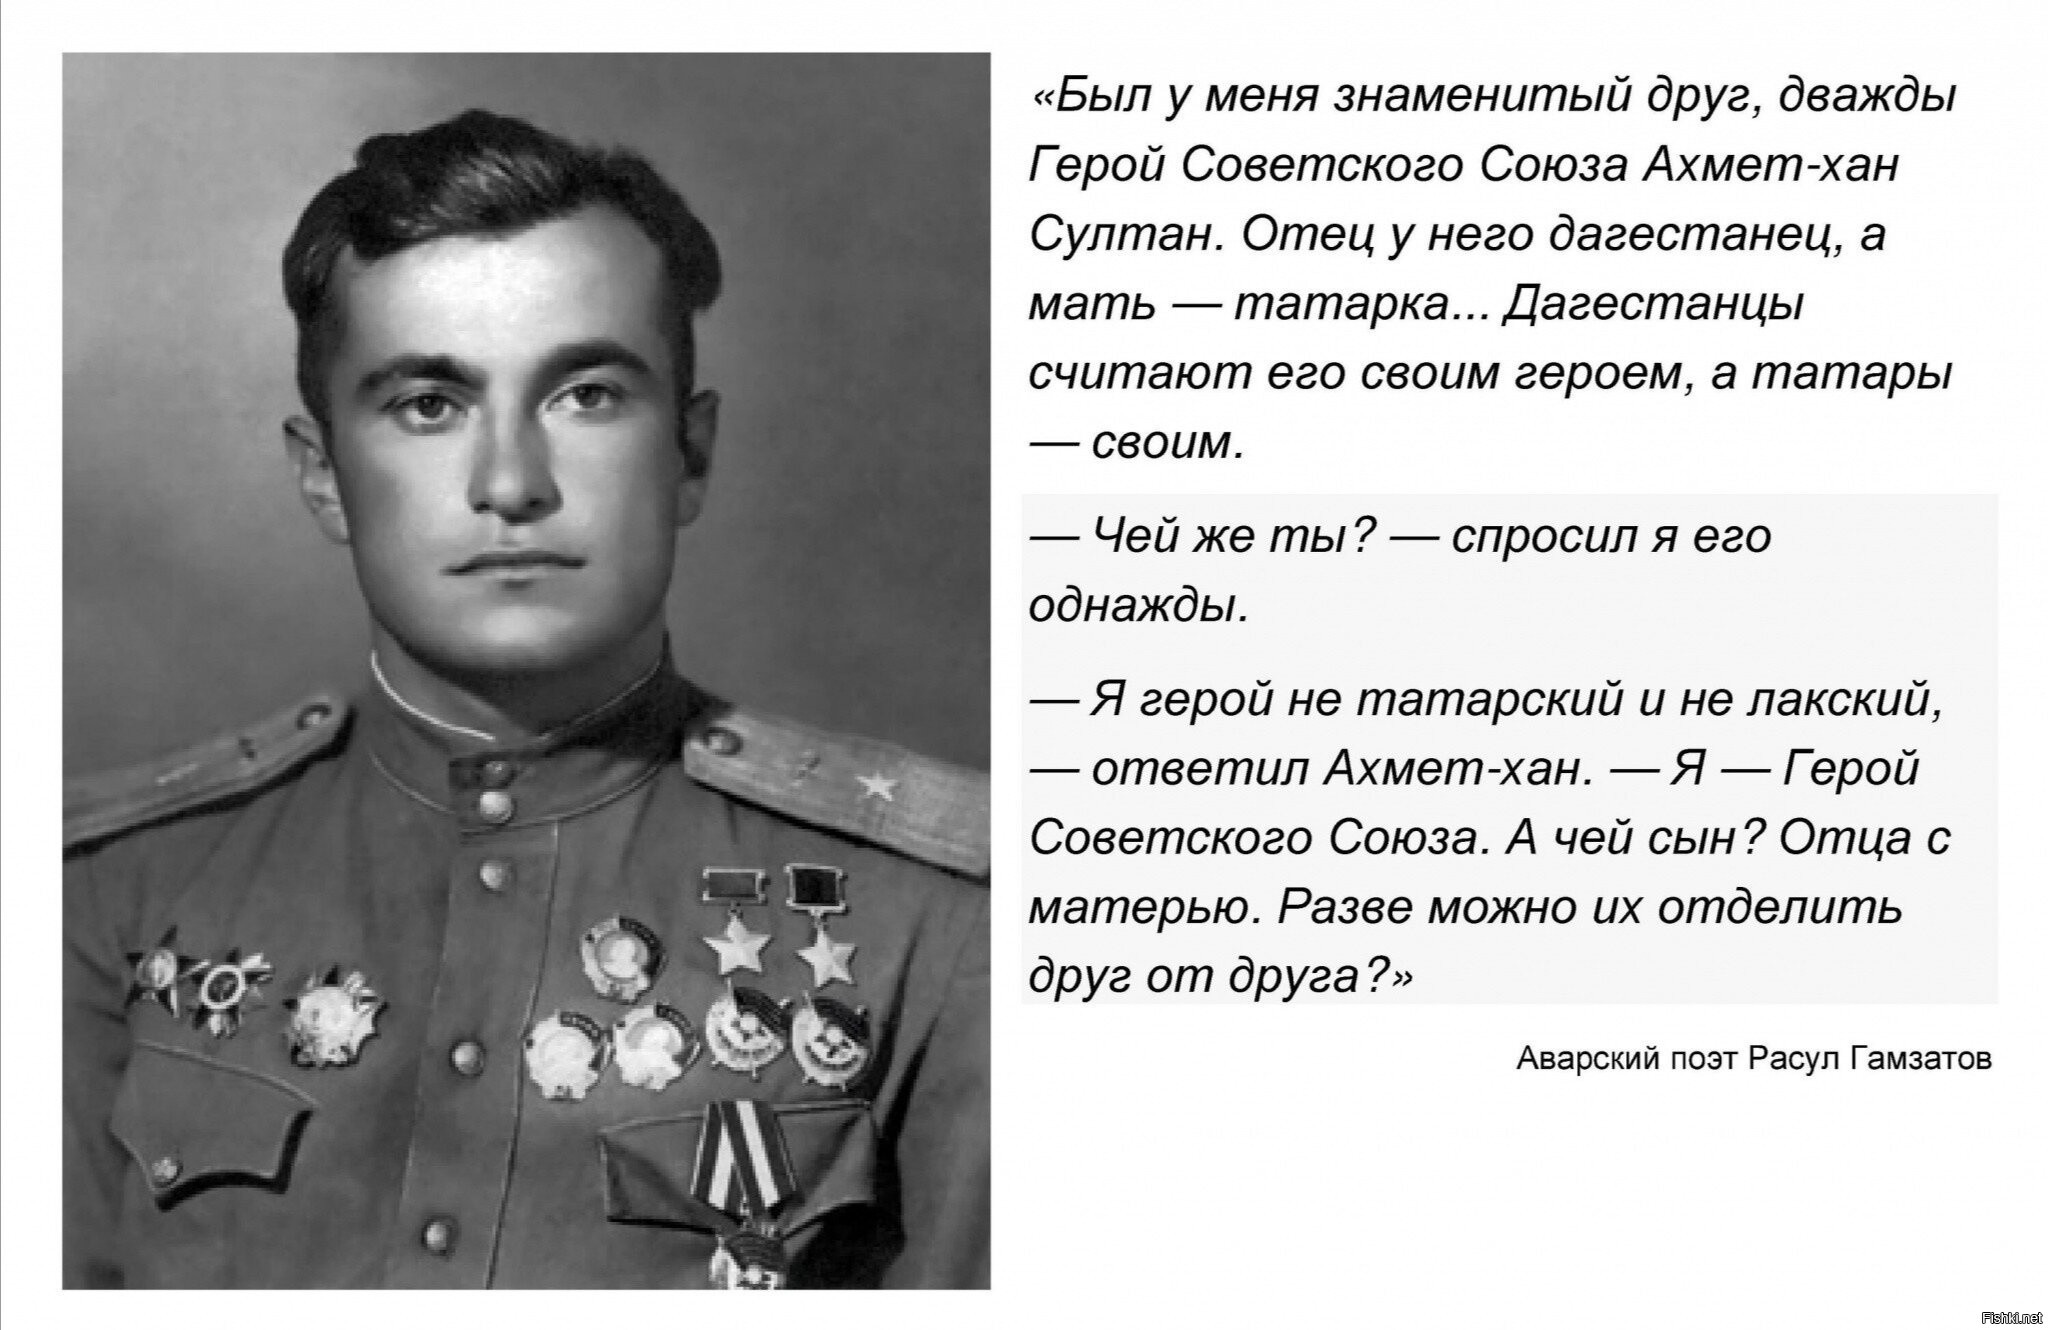 Дагестанцы герои советского Союза